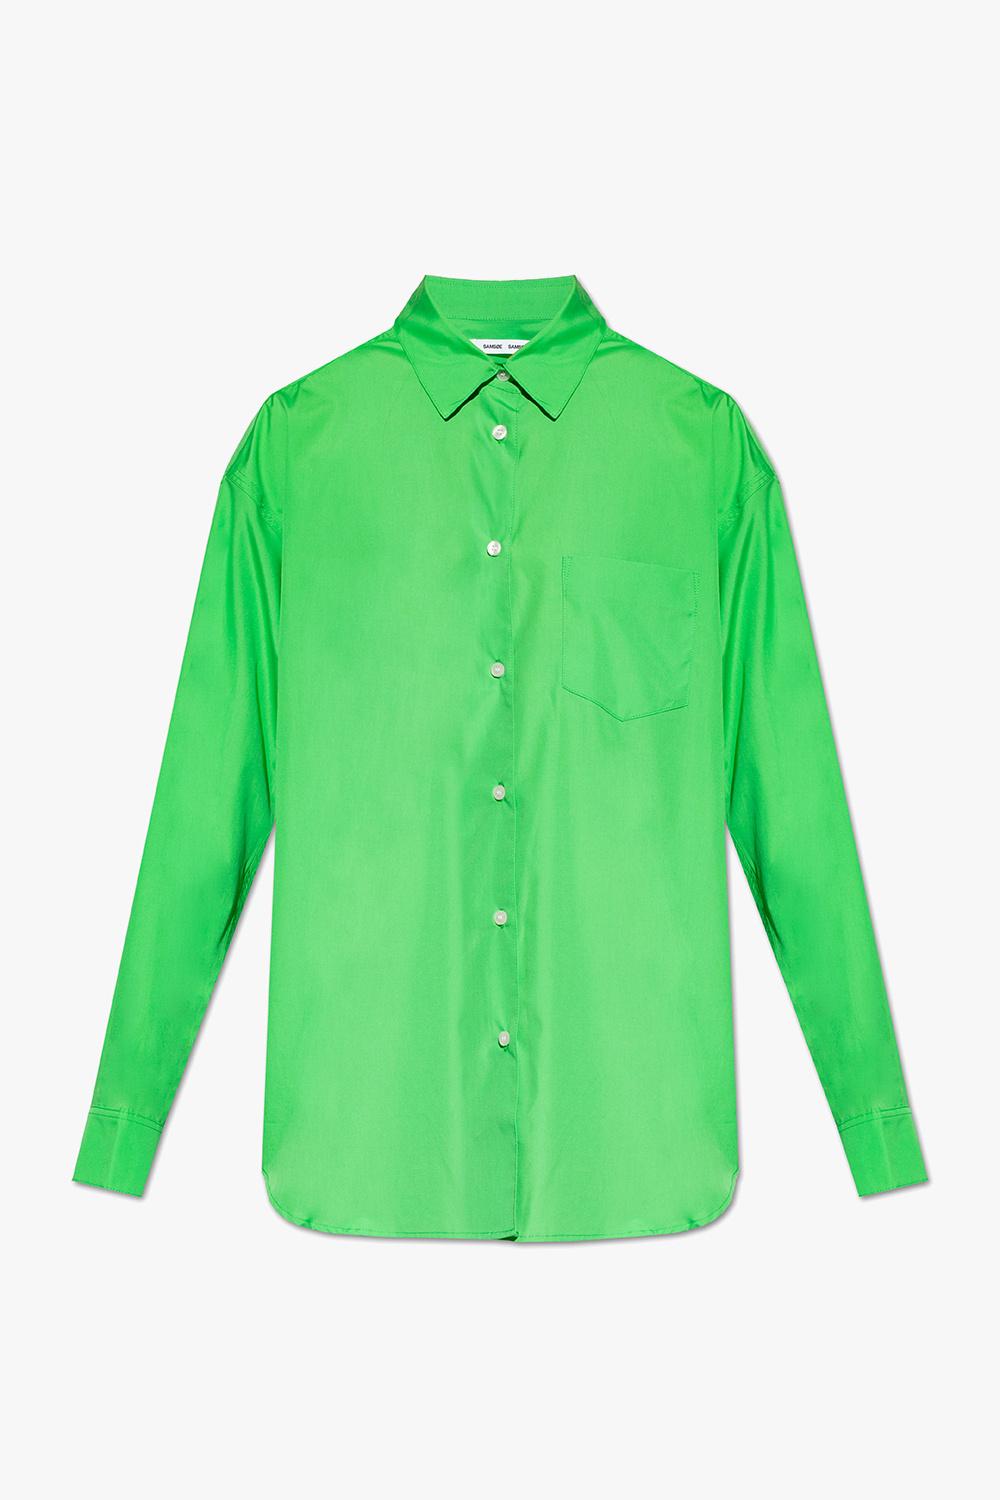 Sams\u00f8e & sams\u00f8e T-Shirt green casual look Fashion Shirts T-Shirts Samsøe & samsøe 